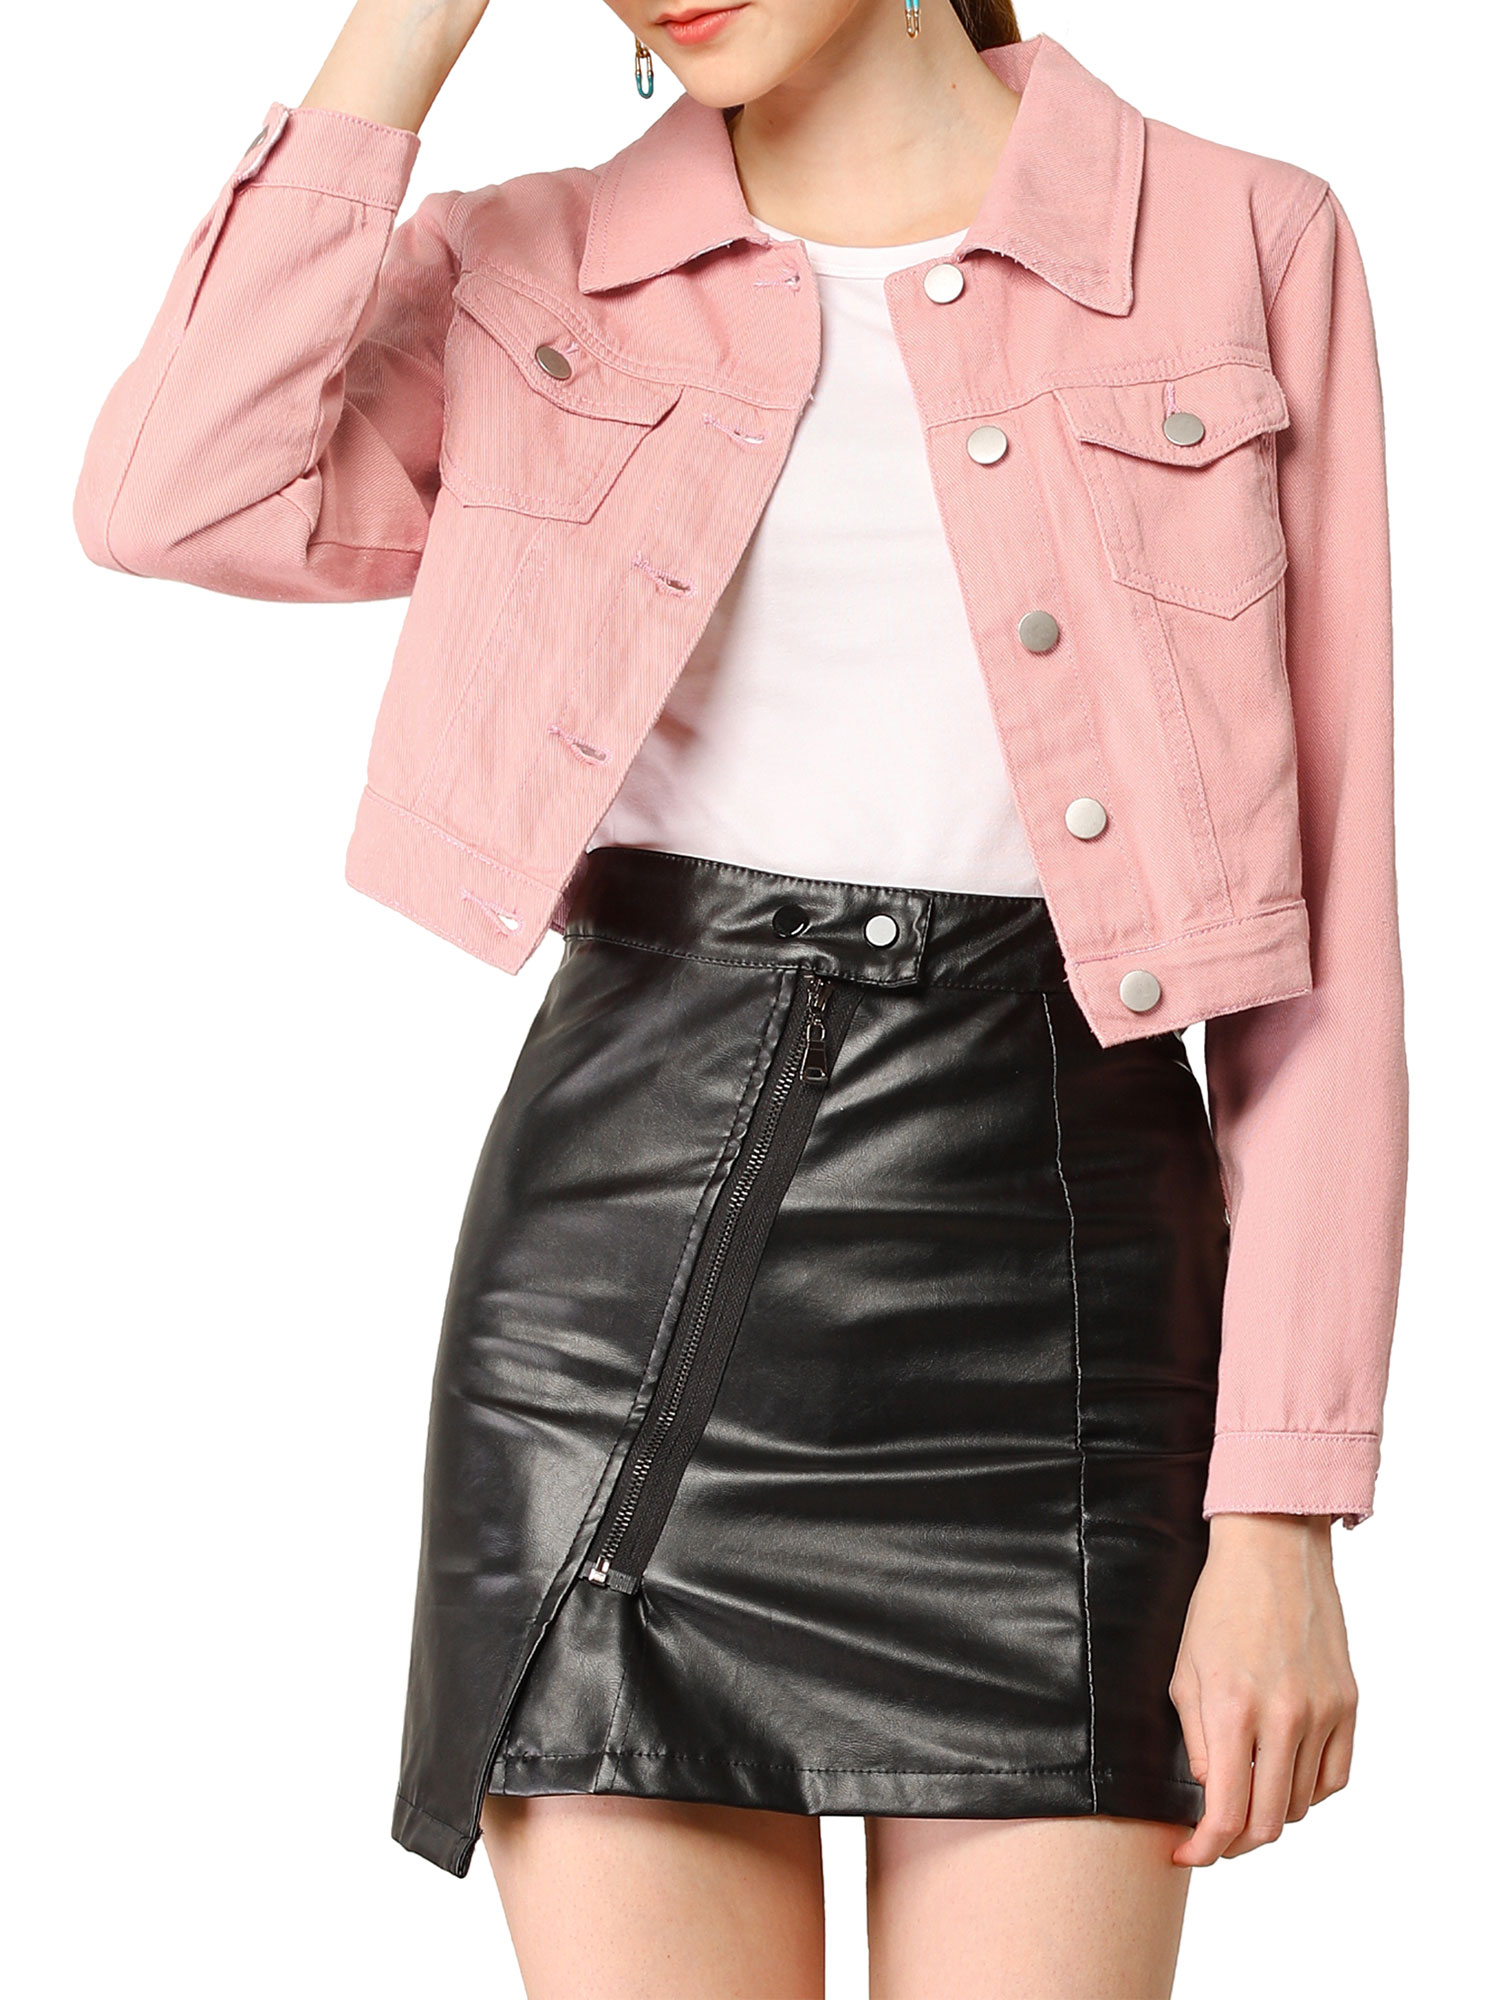 Unique Bargains Women's Button Down Long Sleeve Cropped Denim Jacket S Peach Pink - image 1 of 8